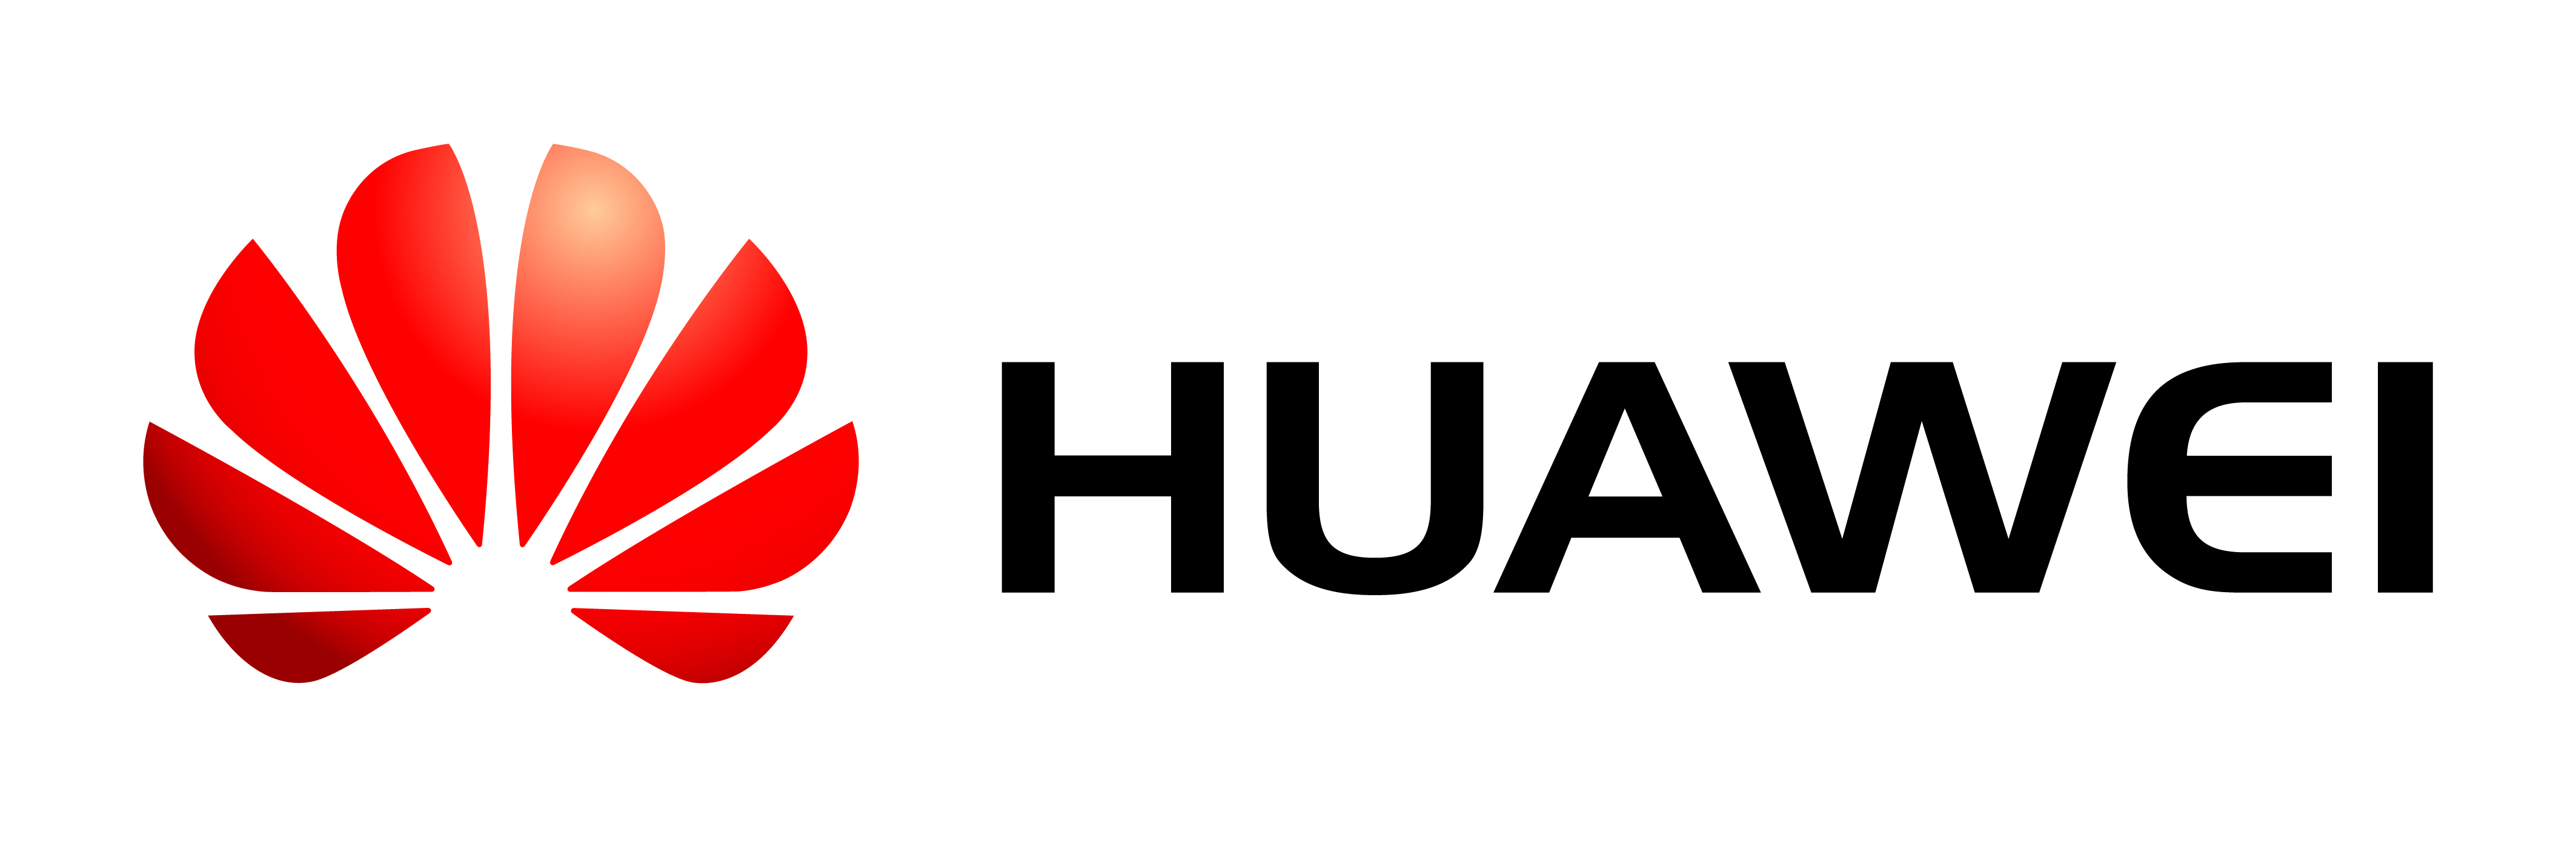  Huawei      Intel